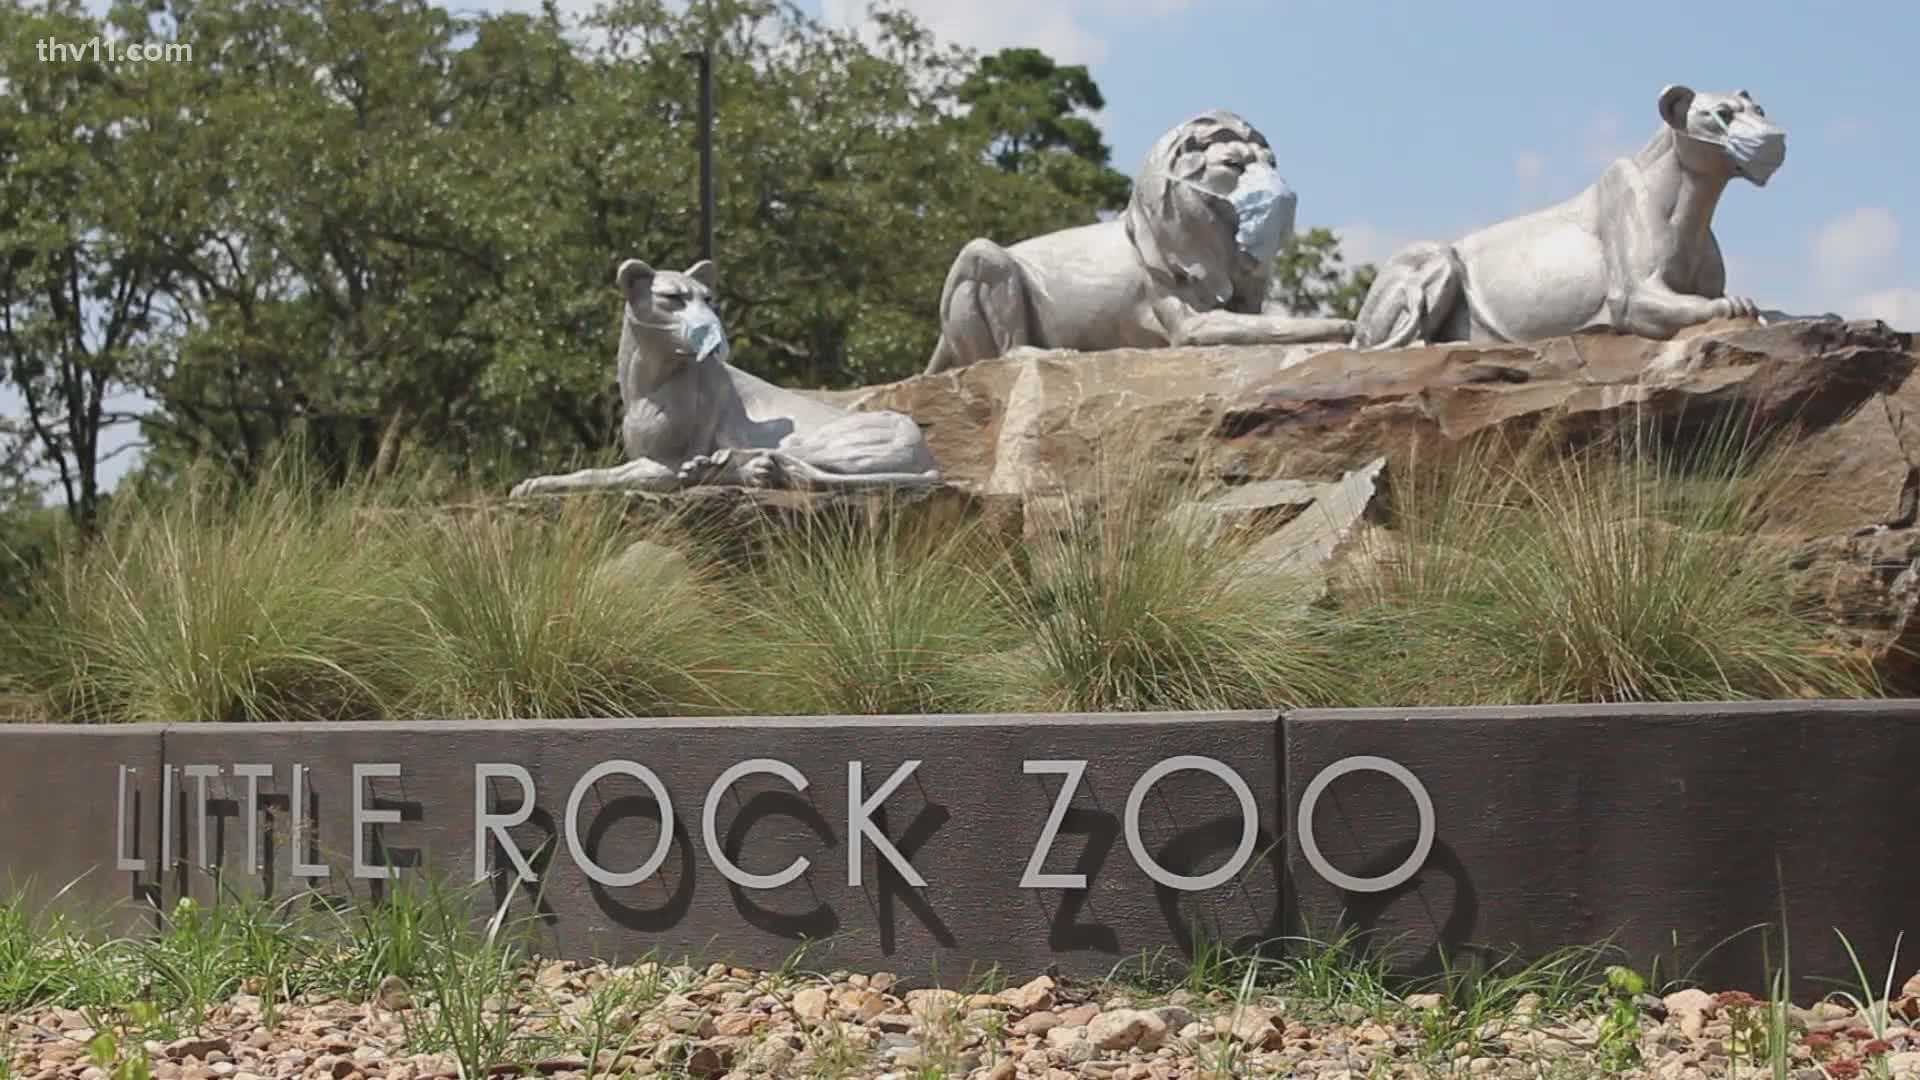 Little Rock Zoo, AR NetLocal